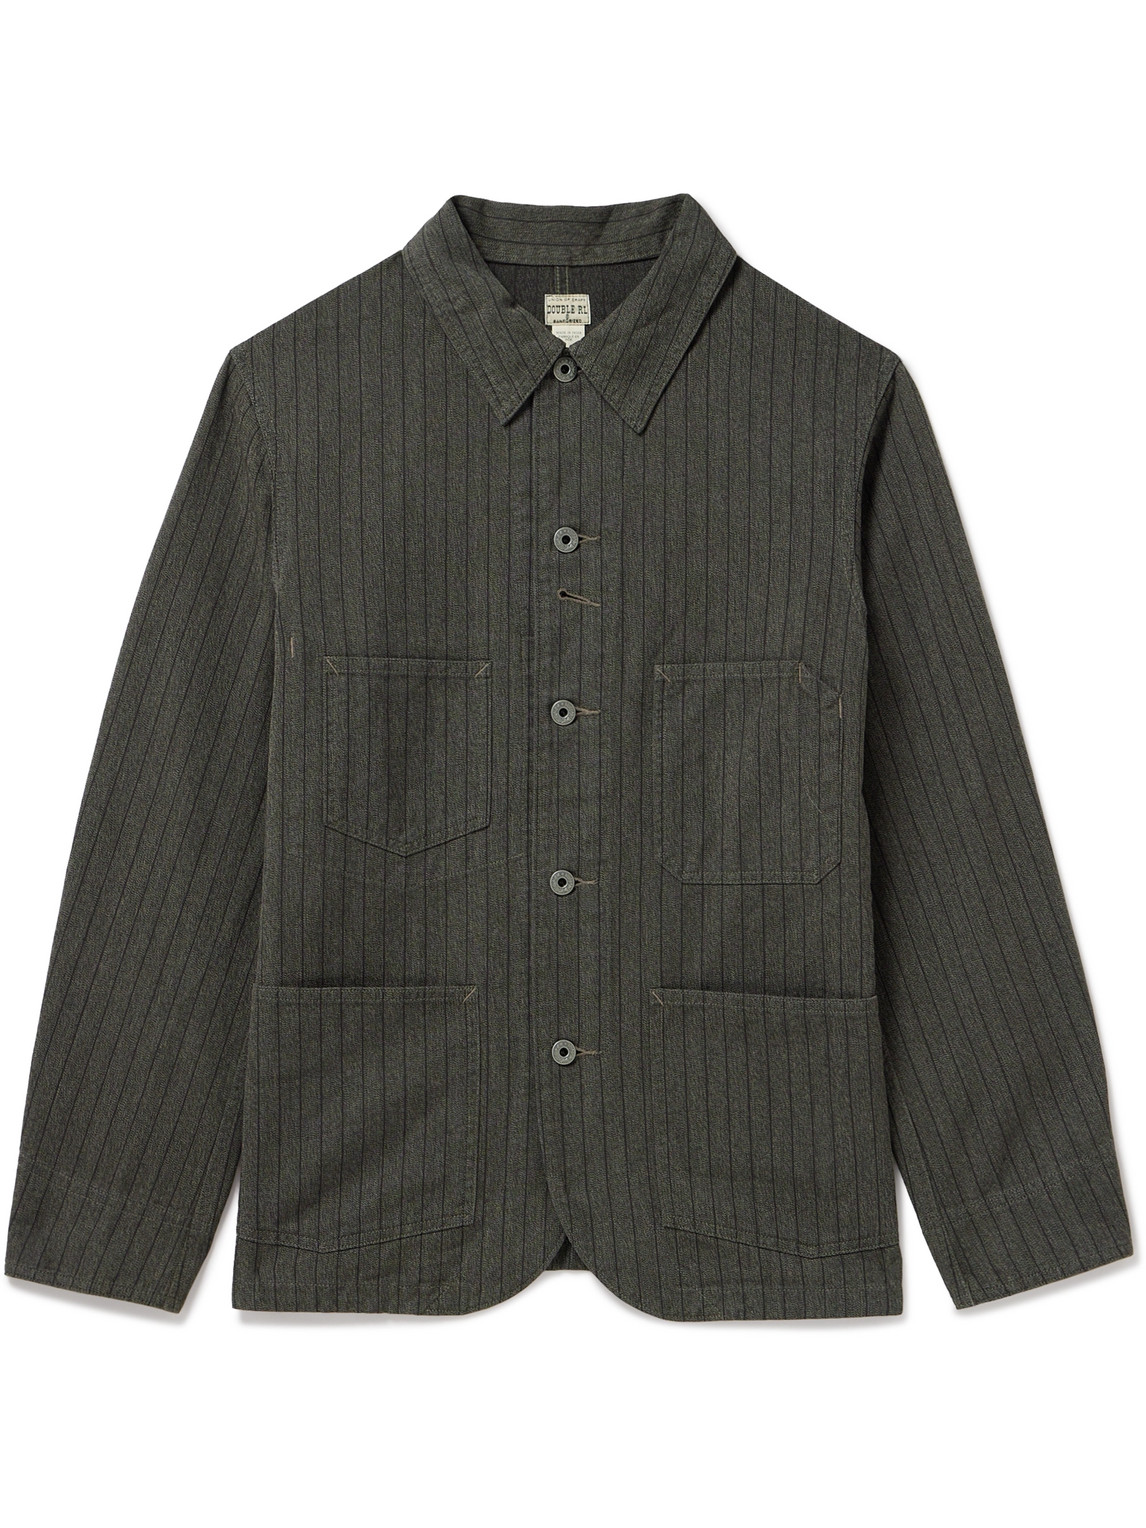 Tanner Striped Cotton Shirt Jacket